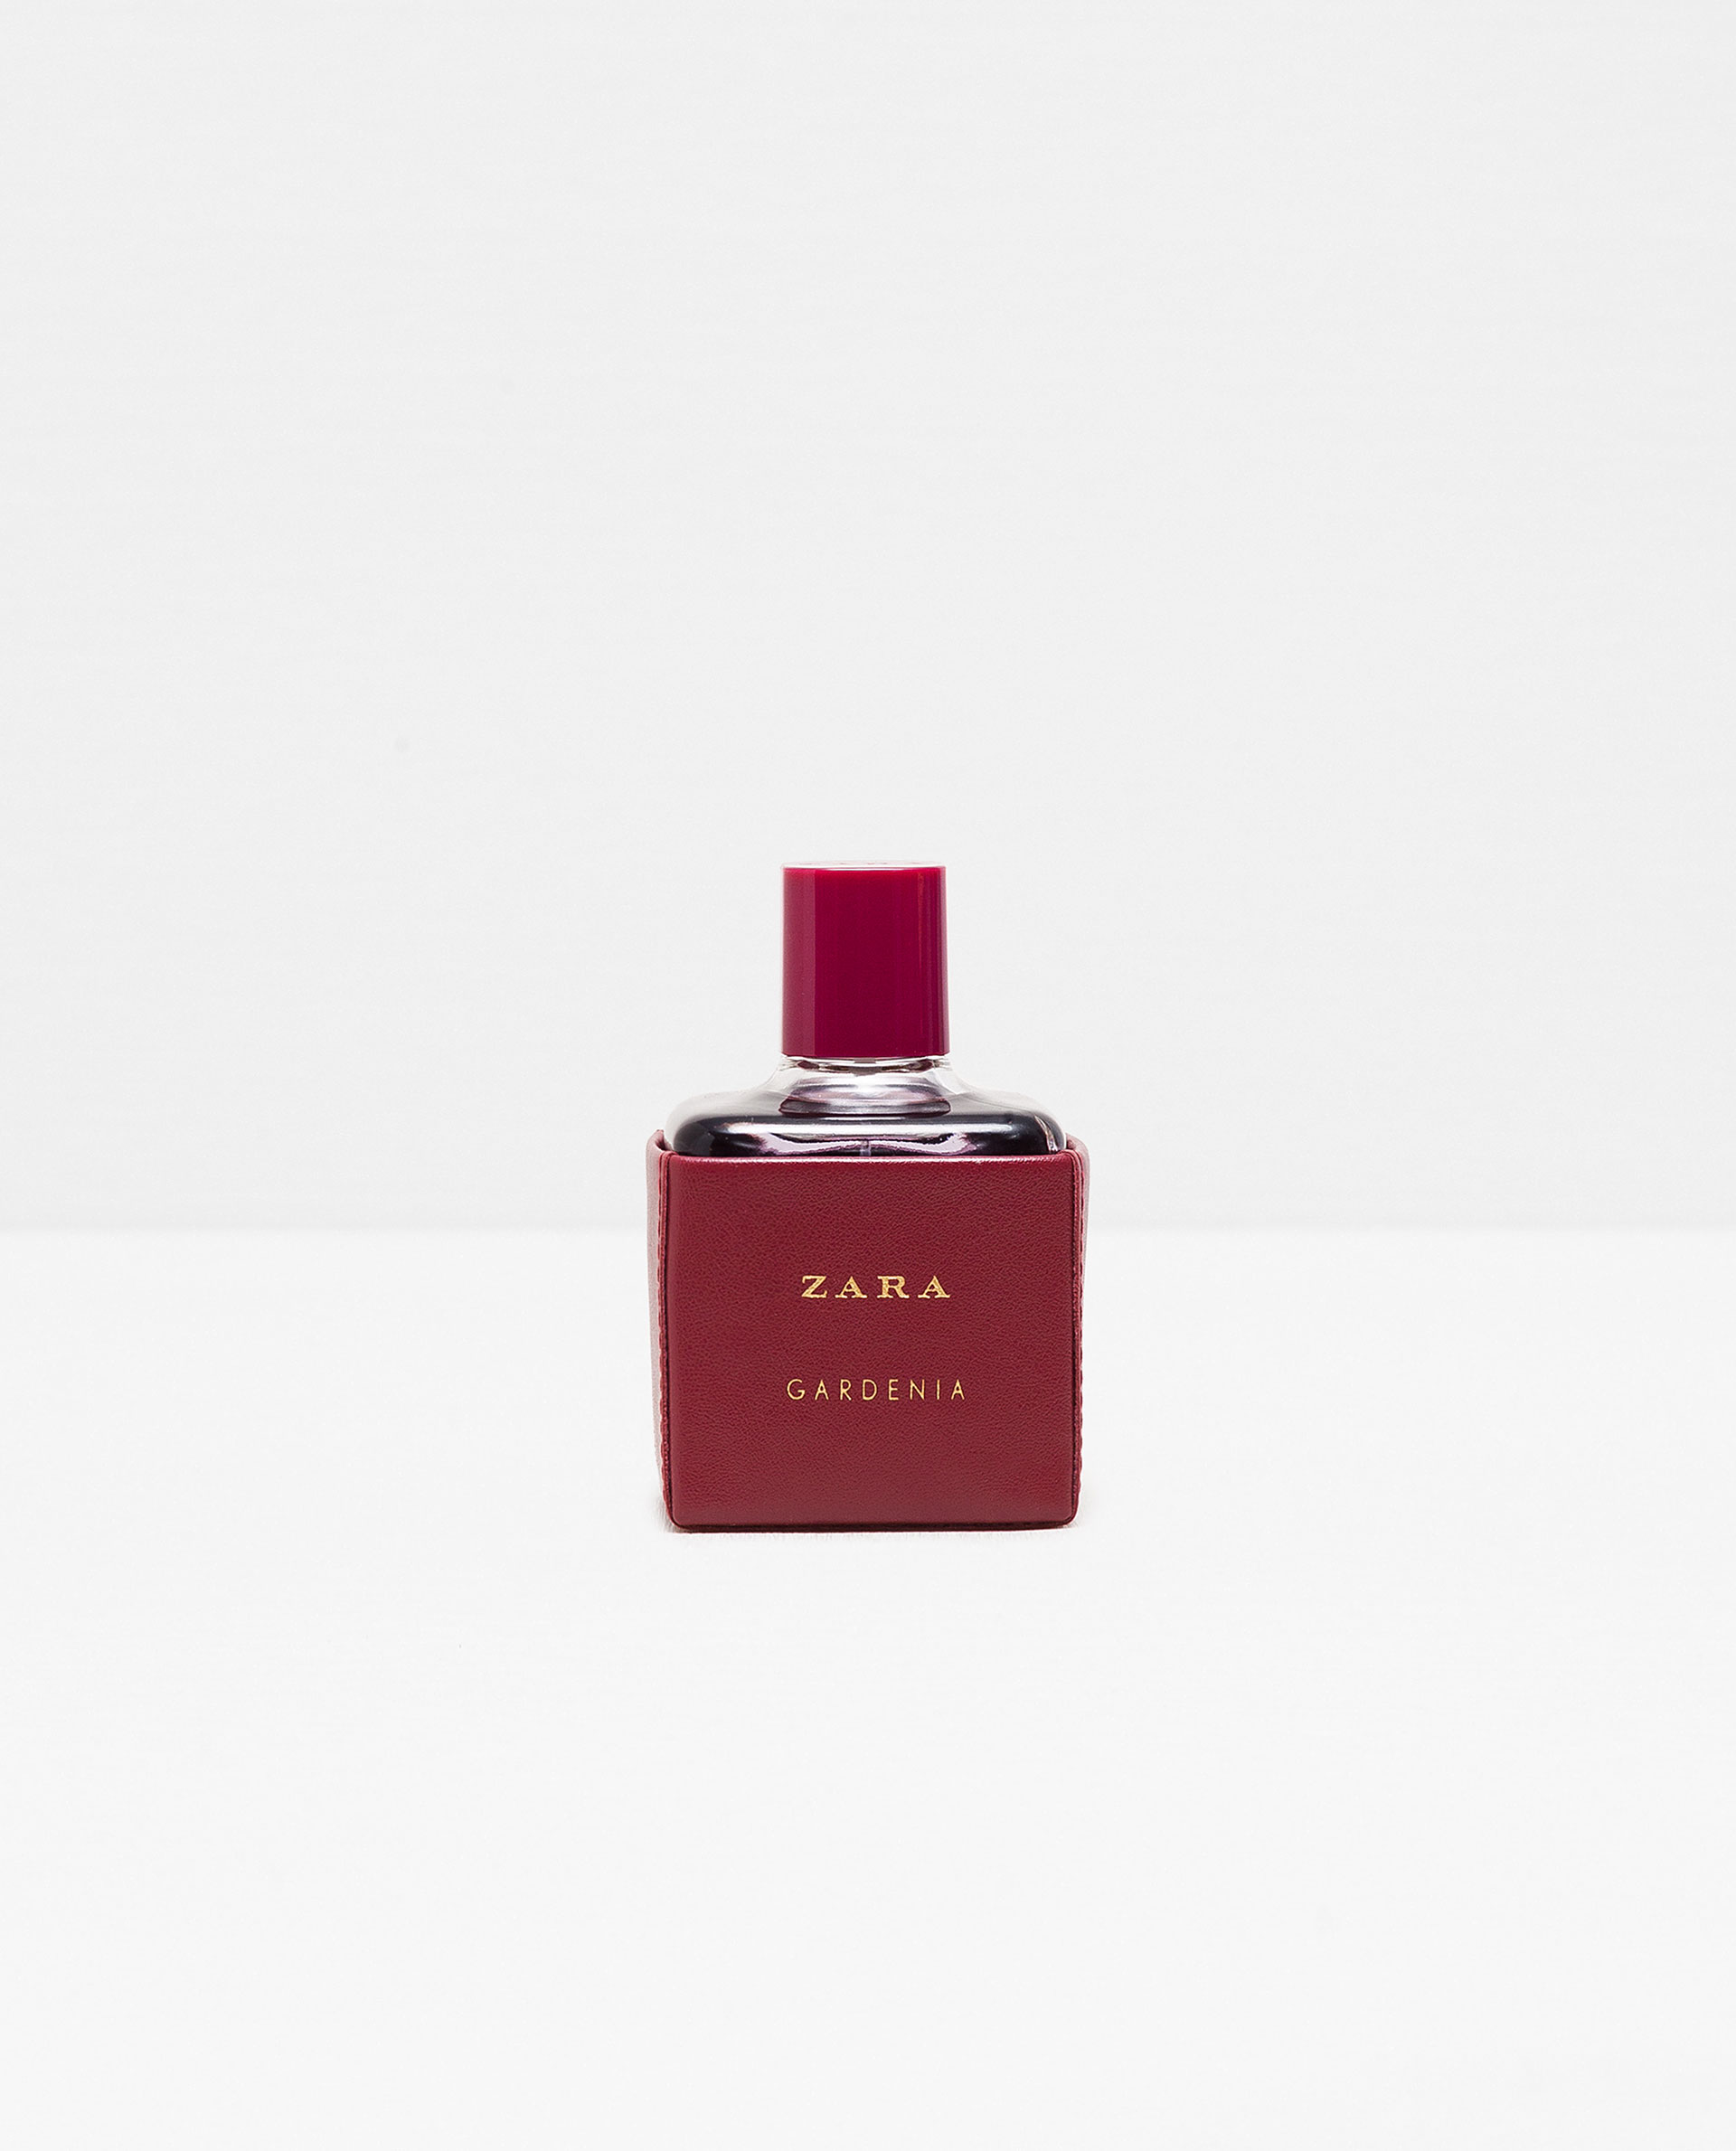 Zara Gardenia Zara perfume - una nuevo fragancia para Mujeres 2016